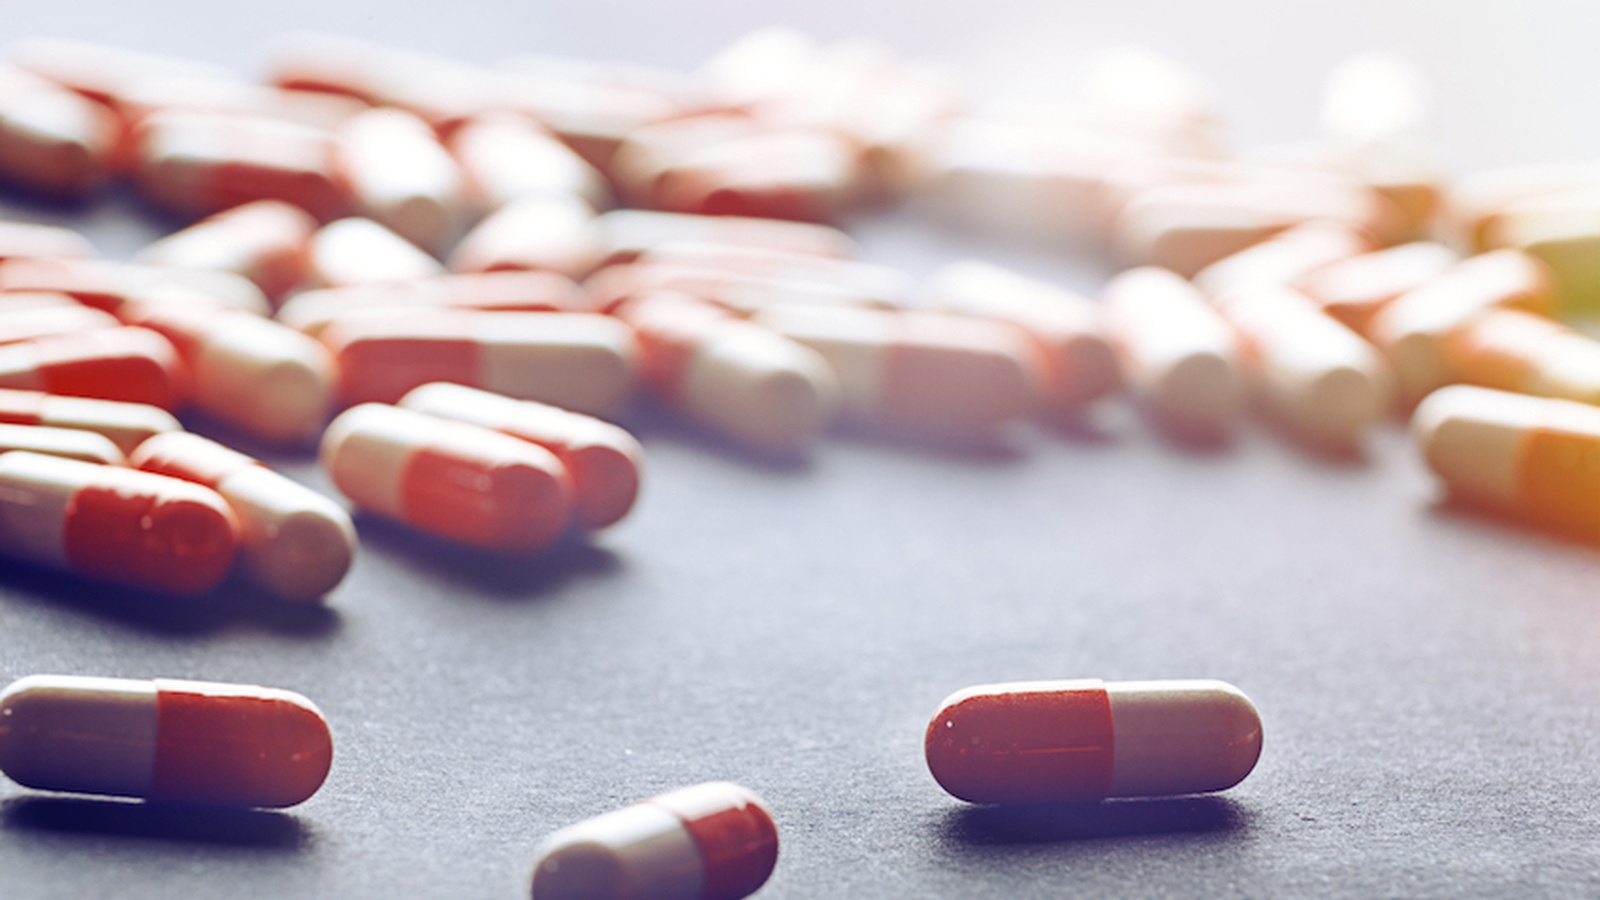 Should We Think Twice About Taking Antibiotics?